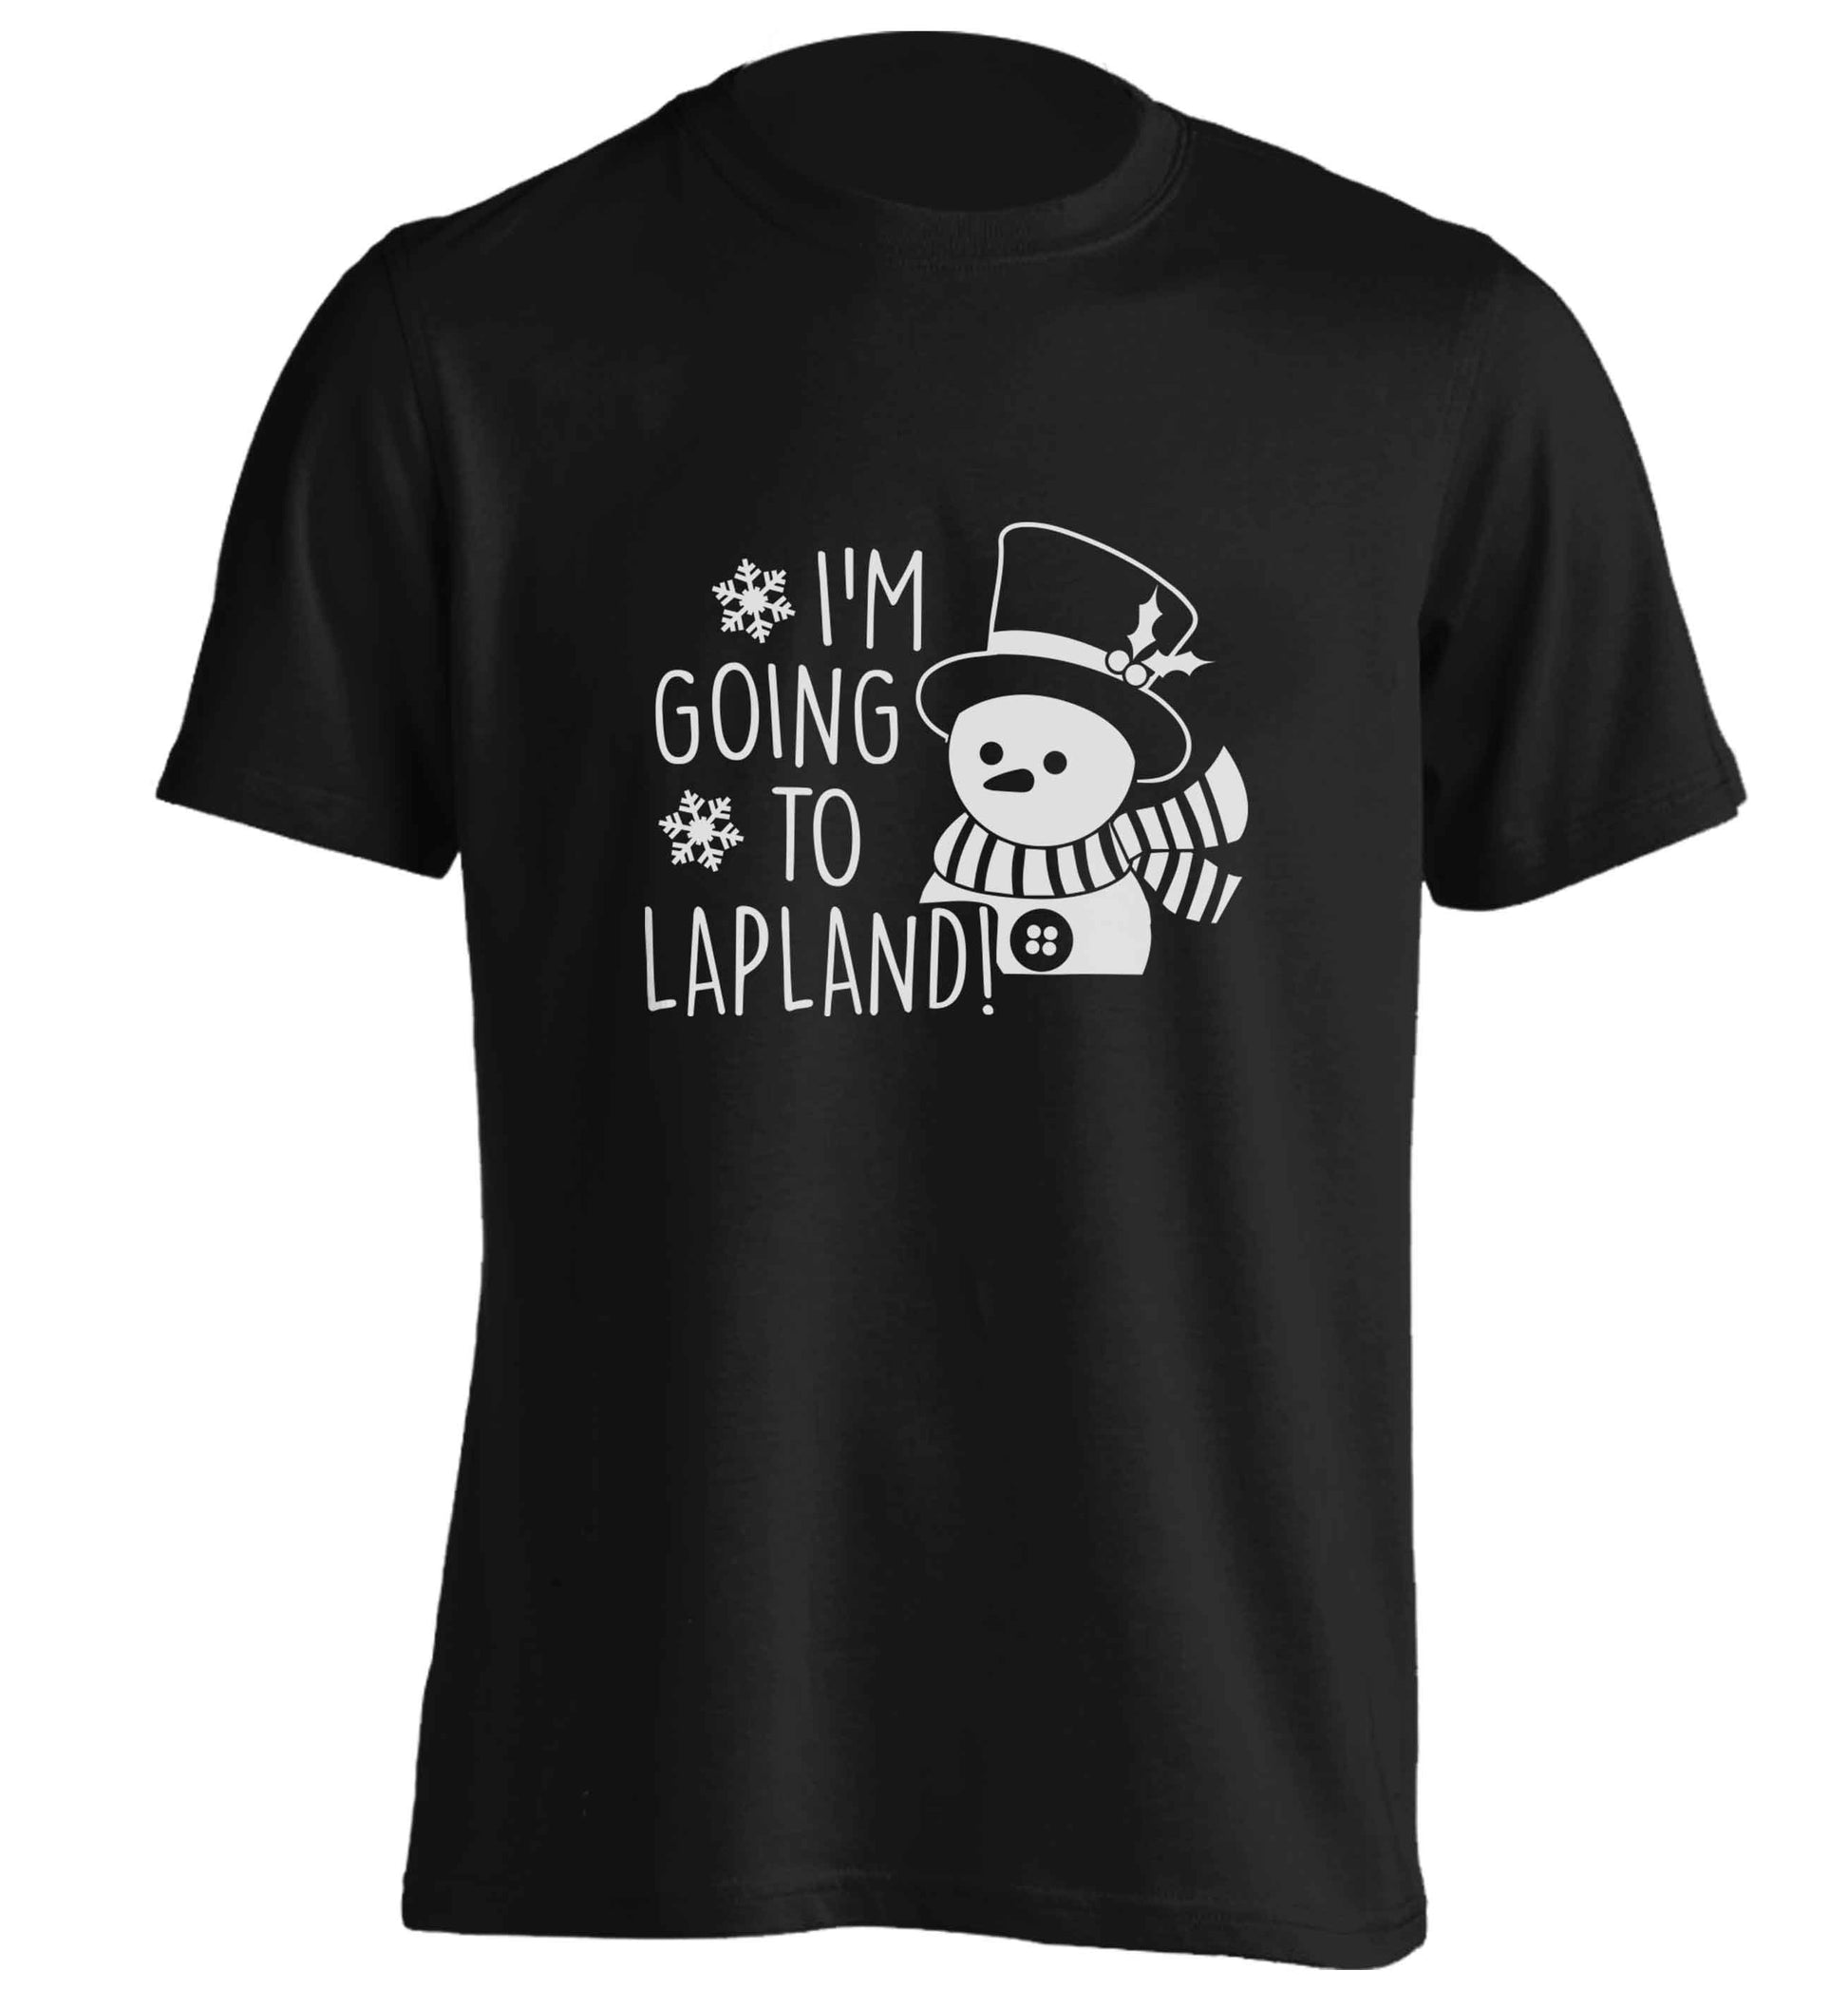 I'm going to Lapland adults unisex black Tshirt 2XL